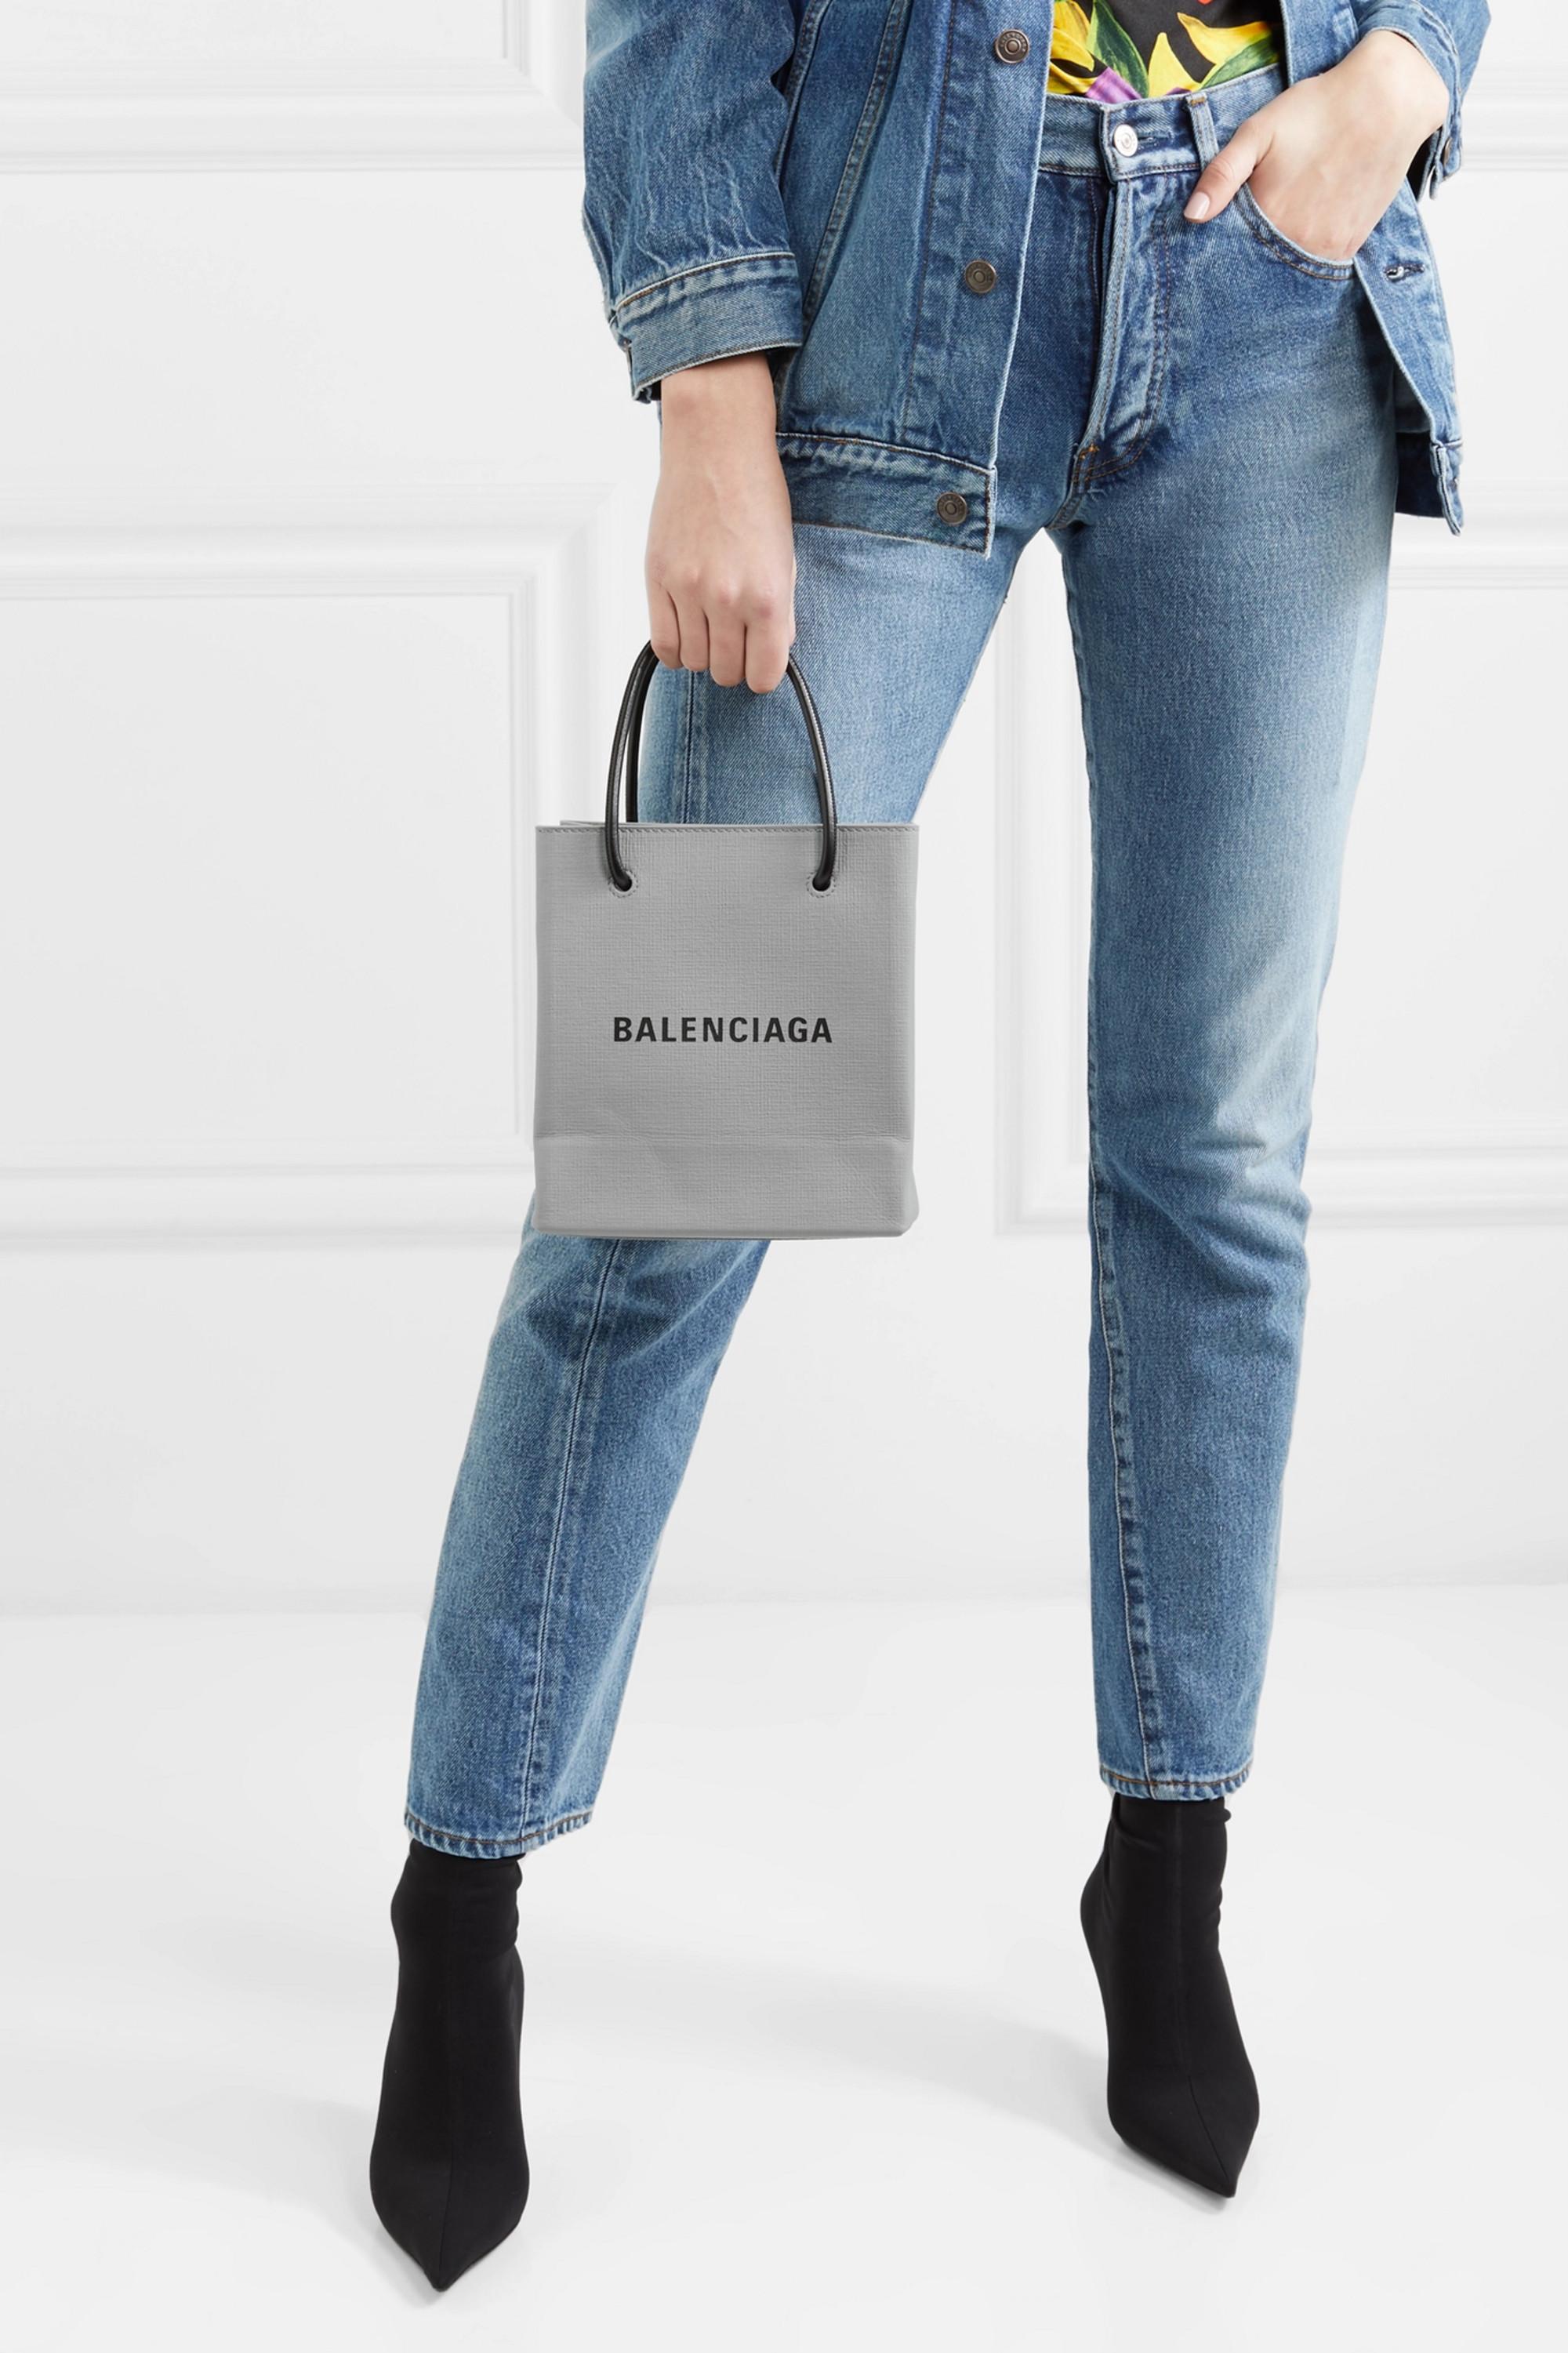 Balenciaga Leather Xxs Shopping Bag in Grey (Gray) | Lyst